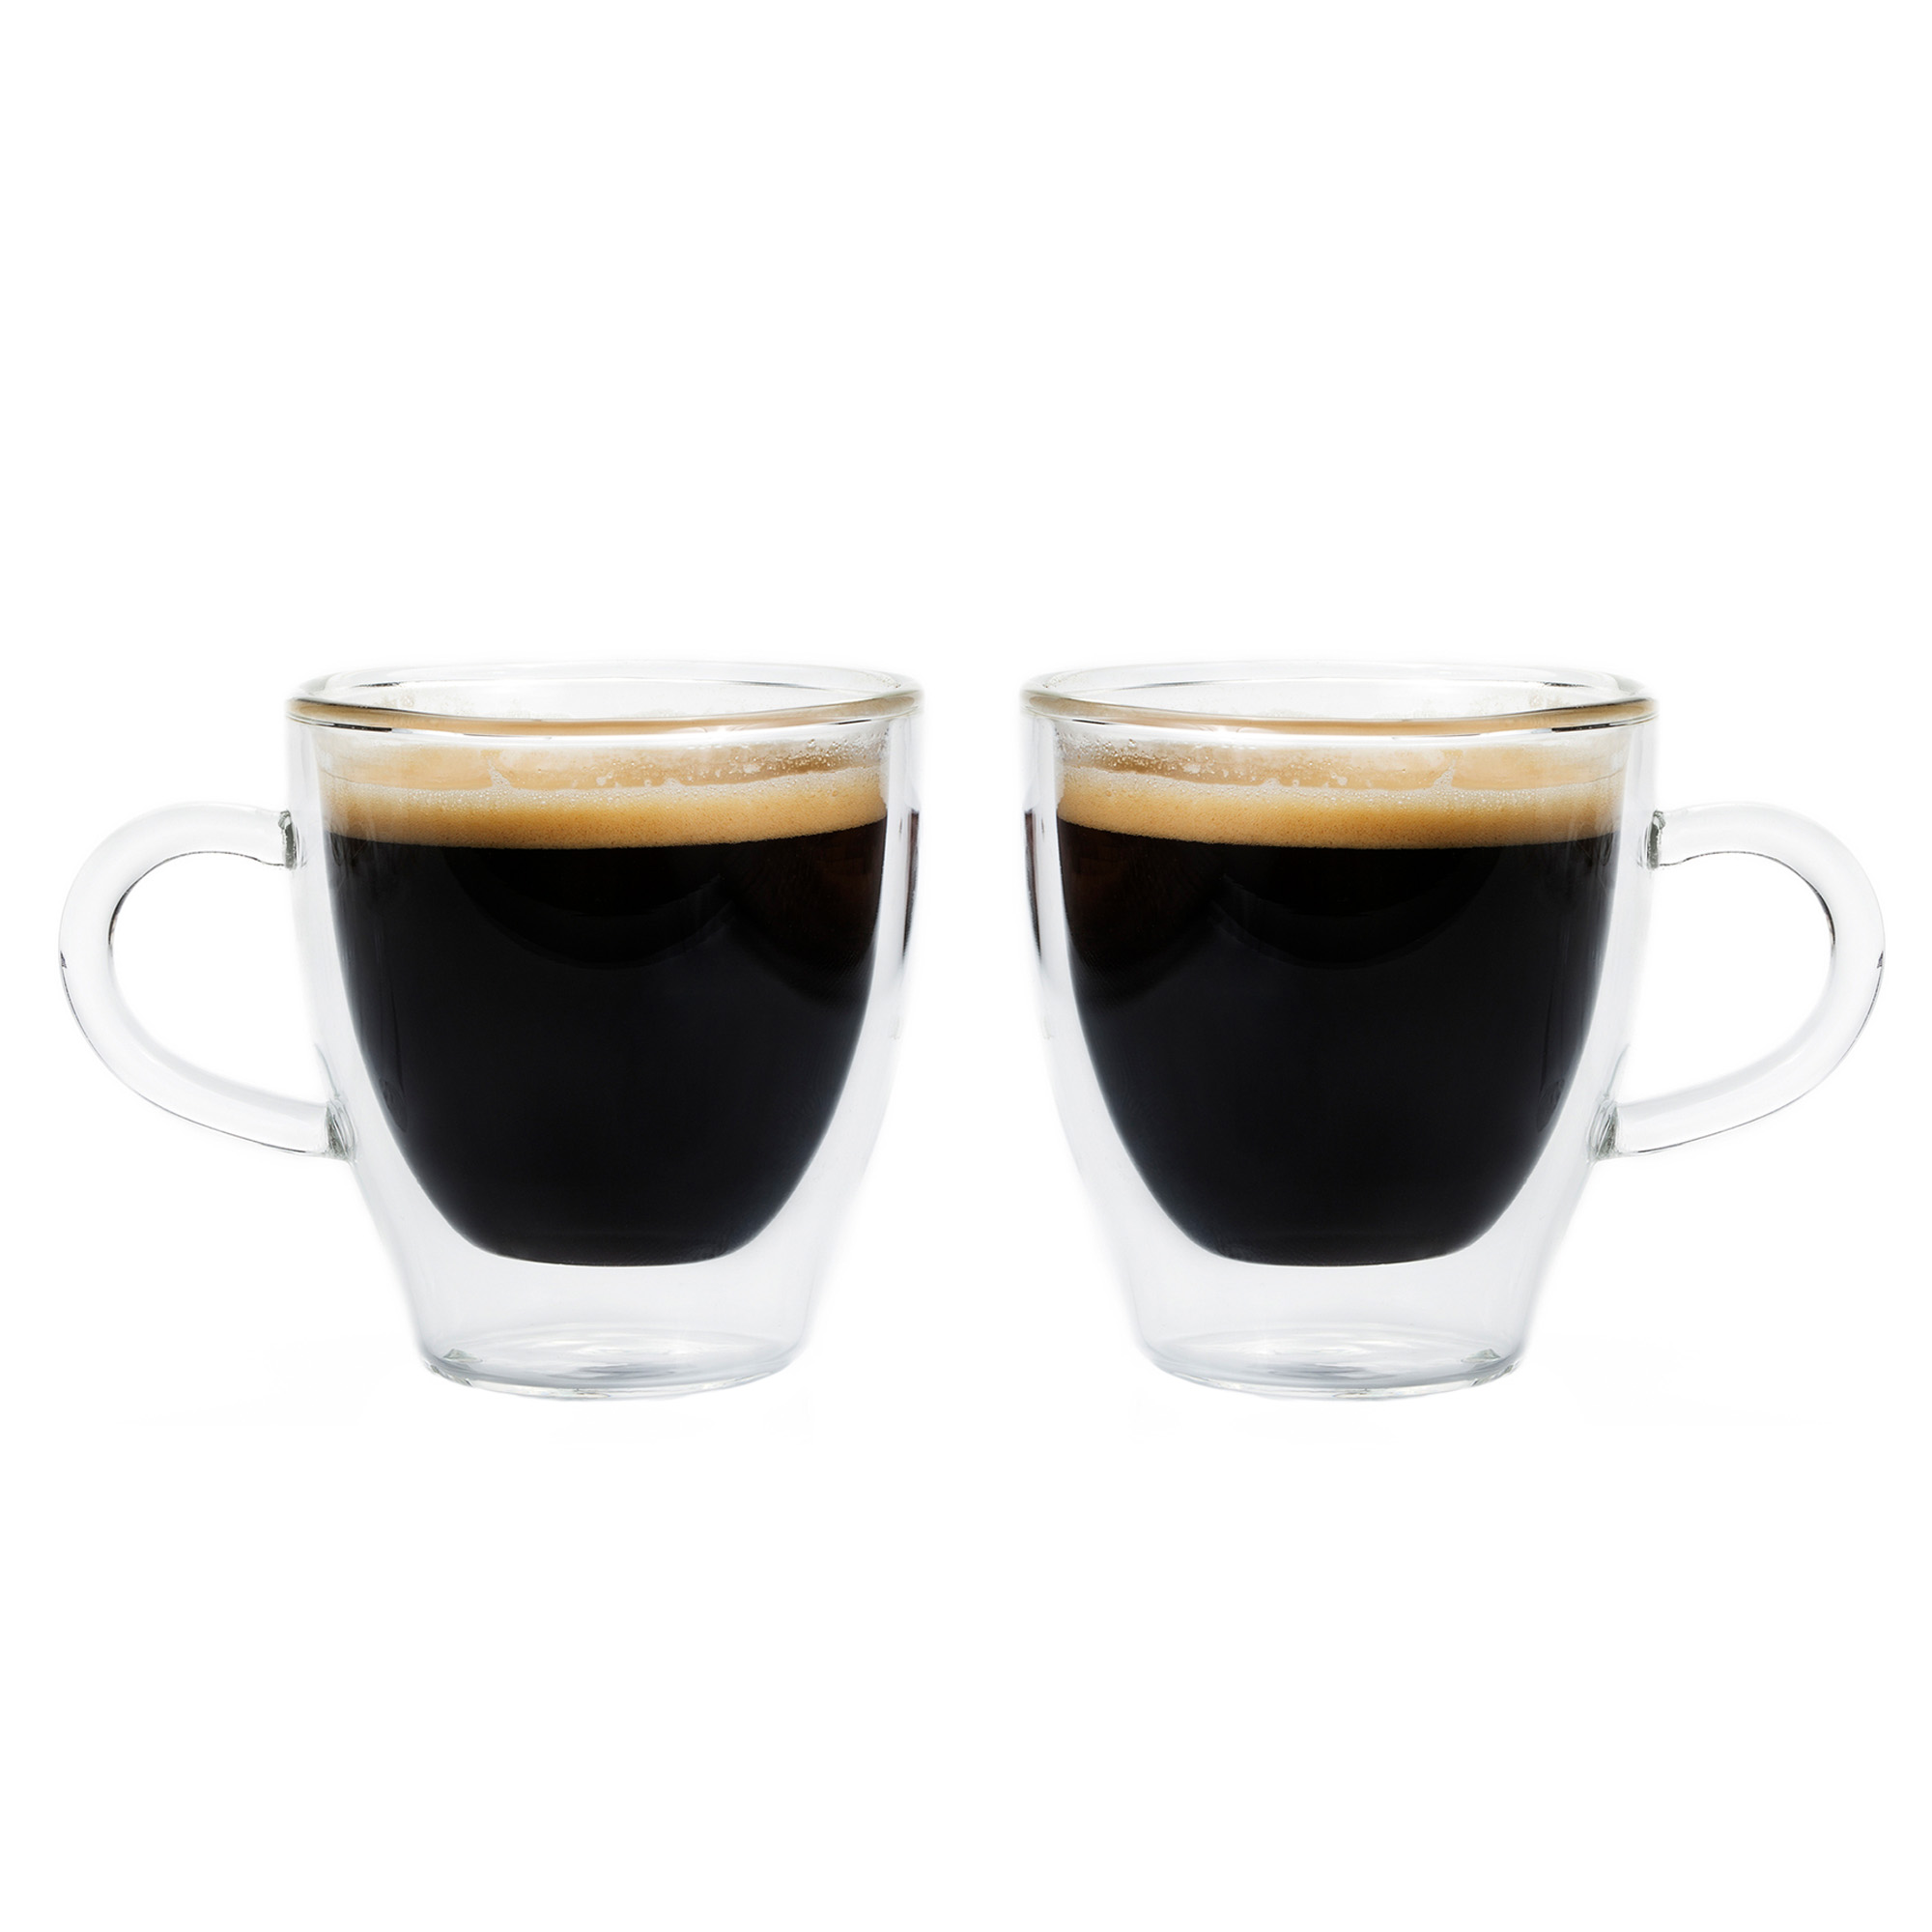 Espresso Shot Glass 3pc Cup Set Tea & More For Coffee.